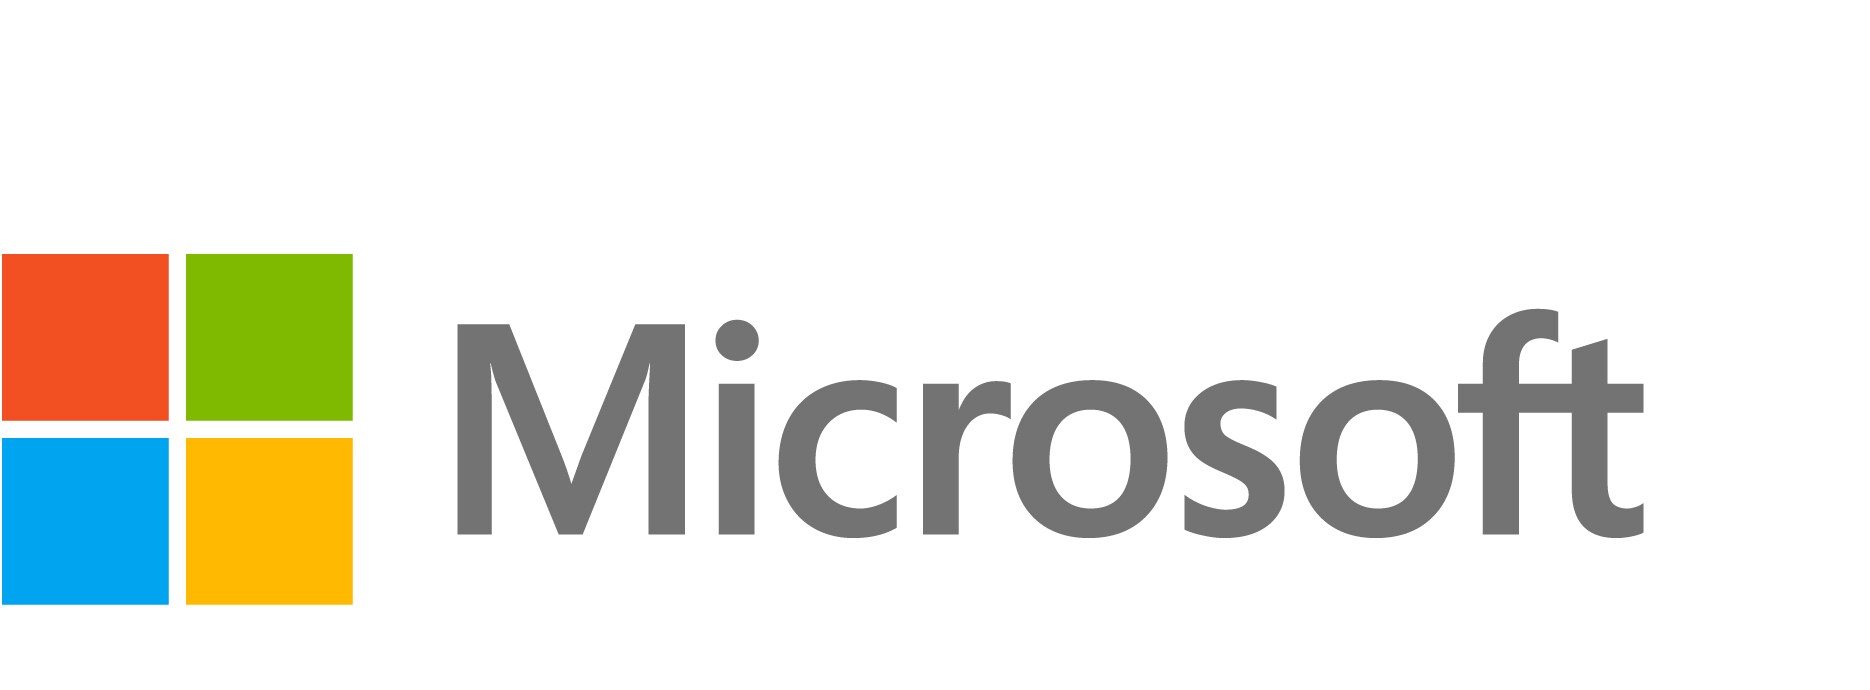 Microsoft Publisher - Licence et assurance logiciel - 1 PC